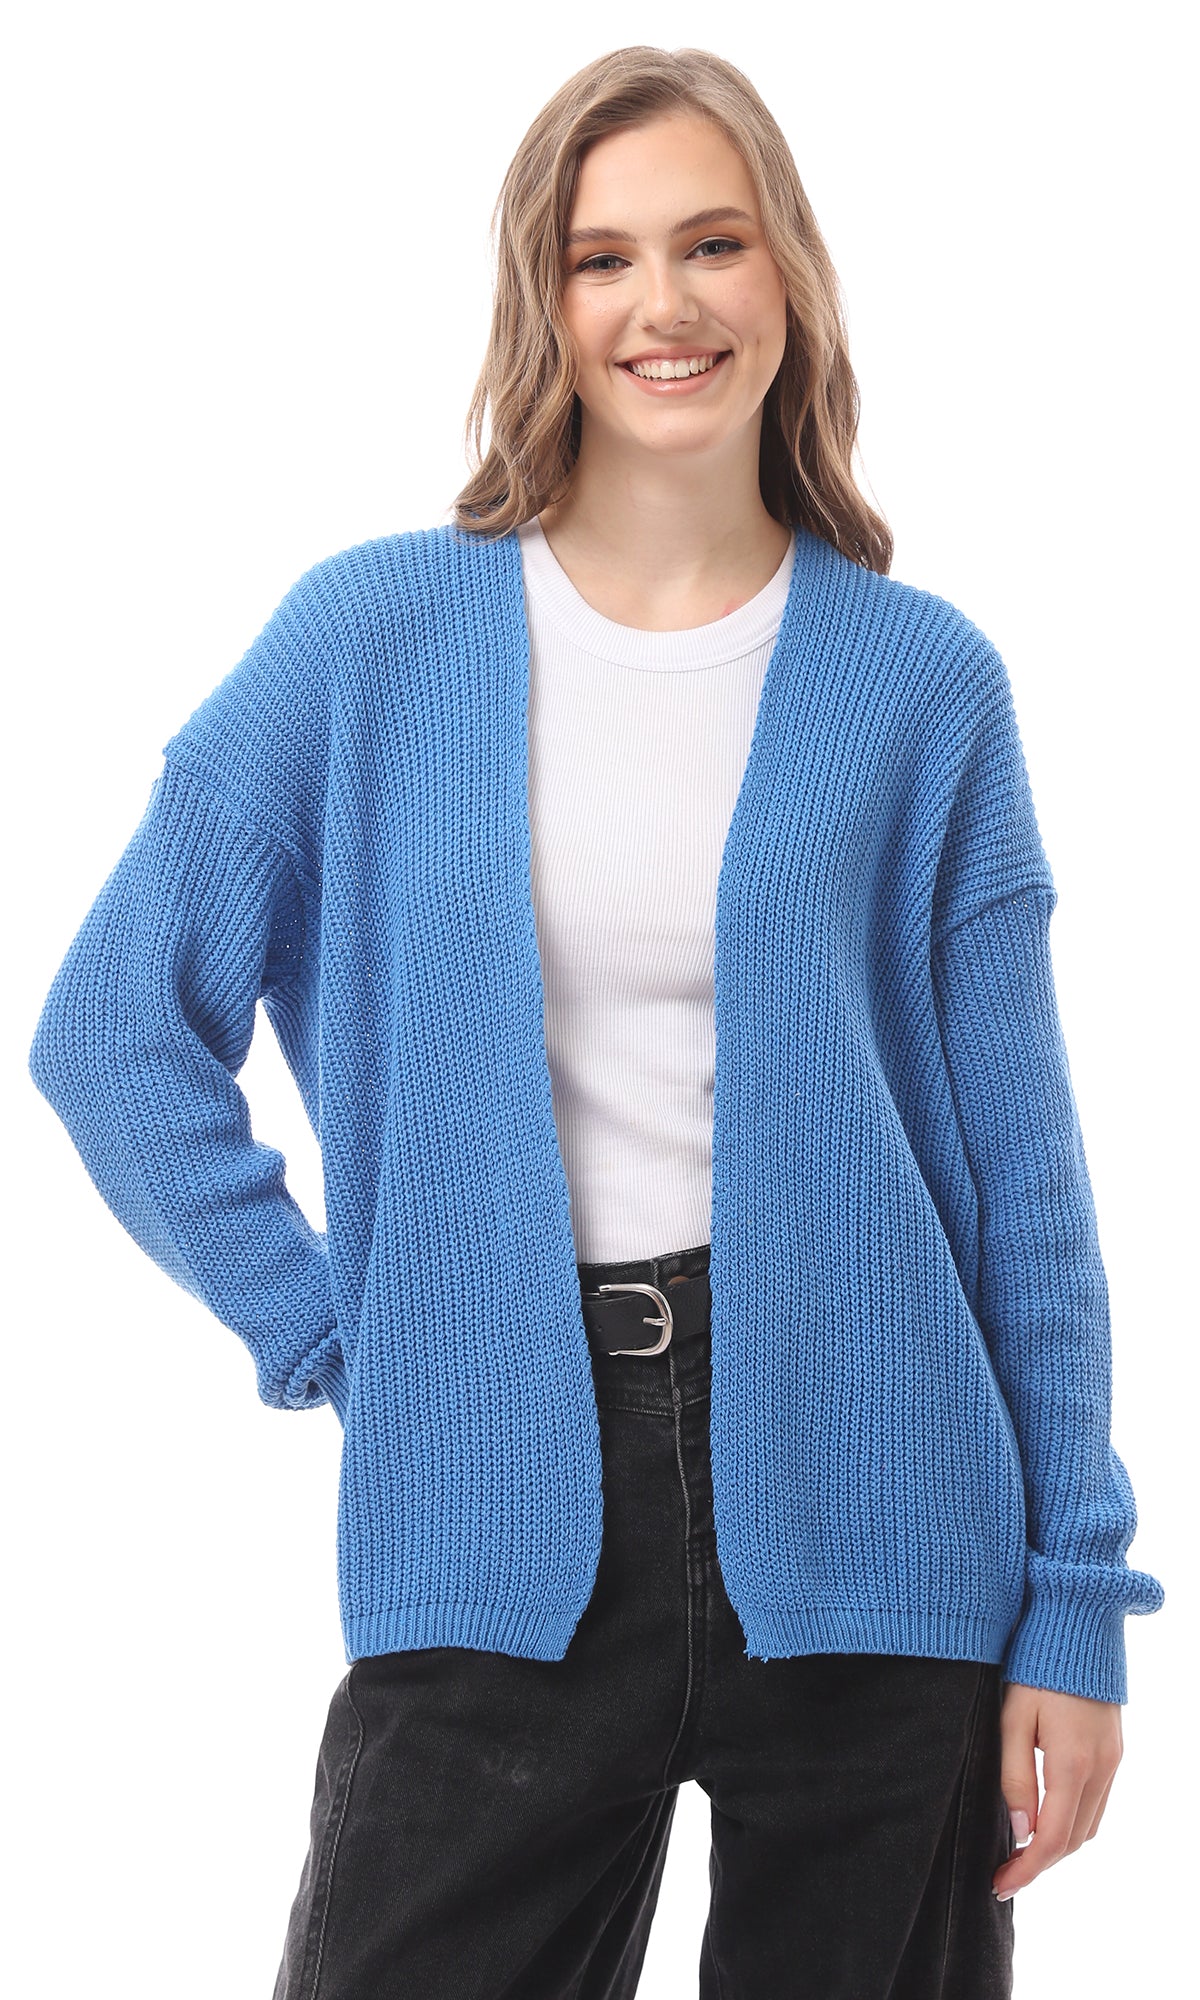 O169869 Slip On Knitted Cornflower Blue Short Cardigan